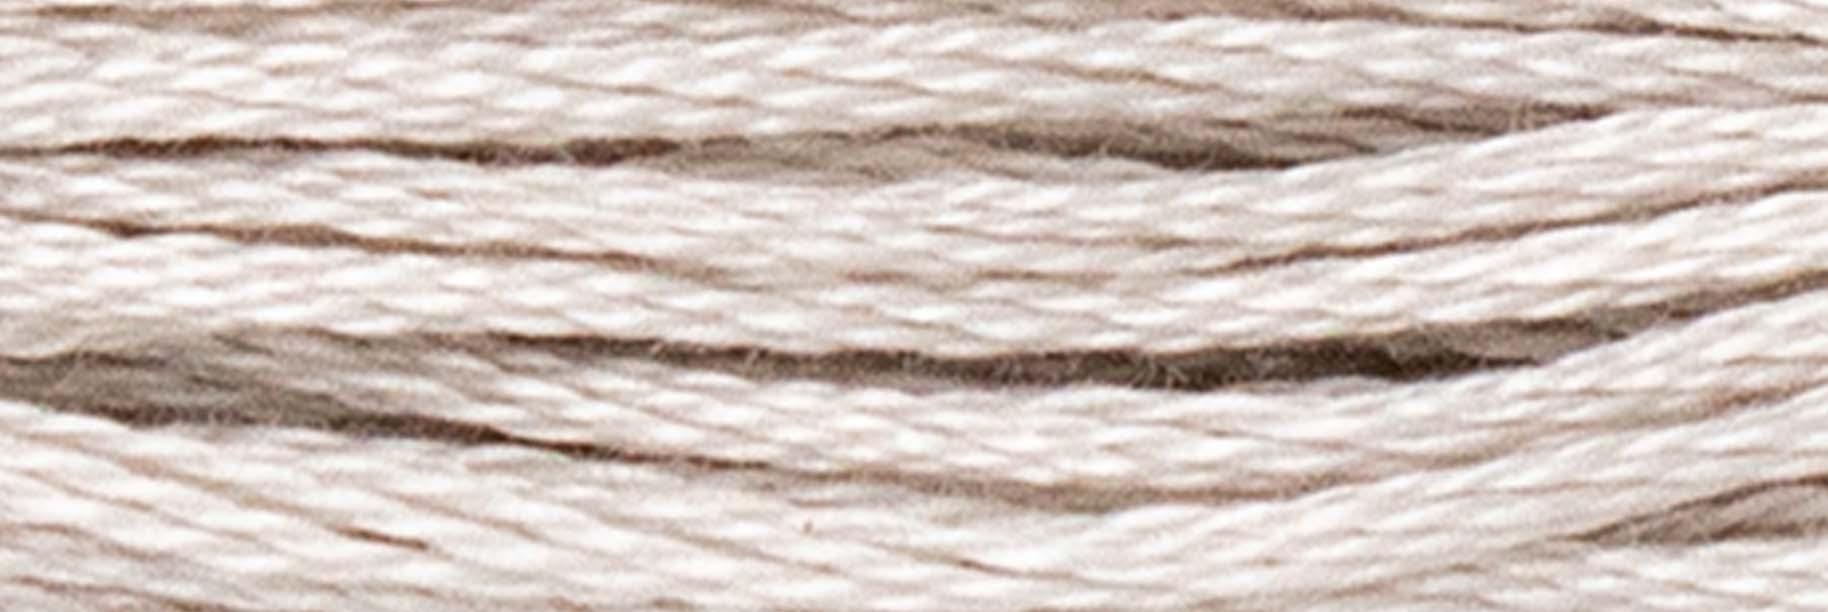 Stranded Cotton Luca-S - 426 / DMC 5 / Anchor 231 - Luca-S Stranded Cotton